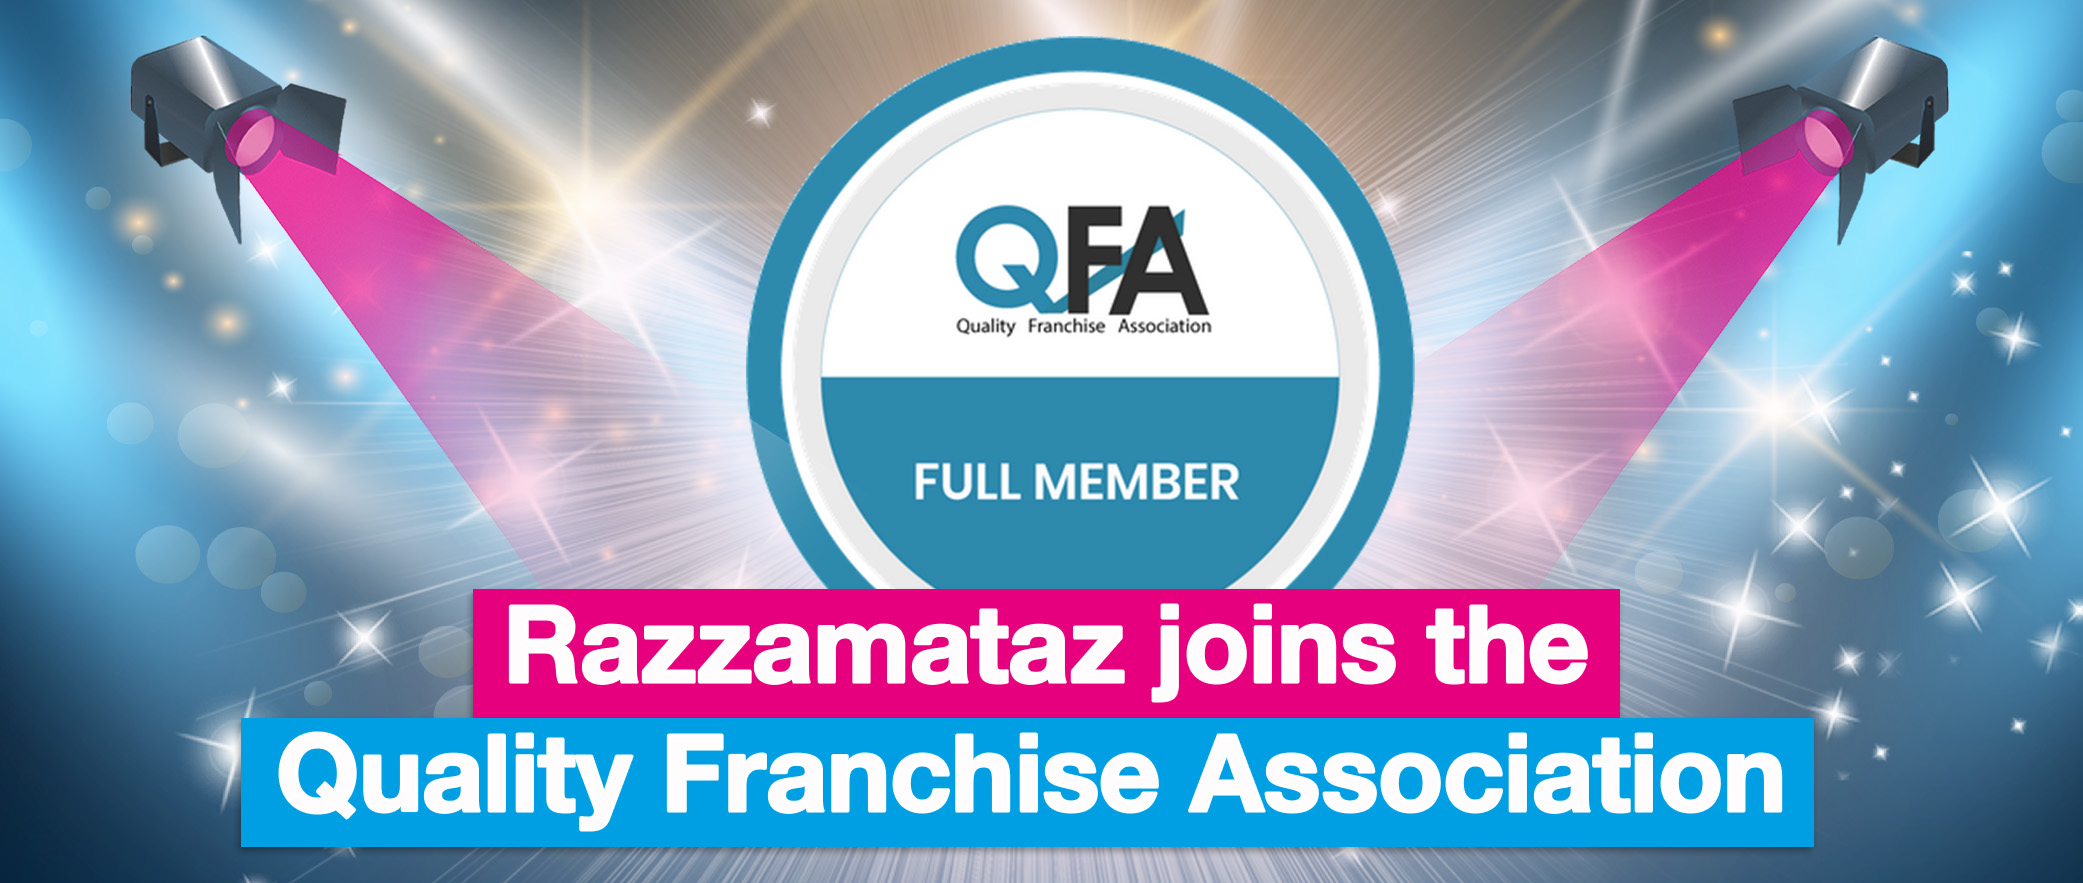 Razzamataz Joins the Quality Franchise Association